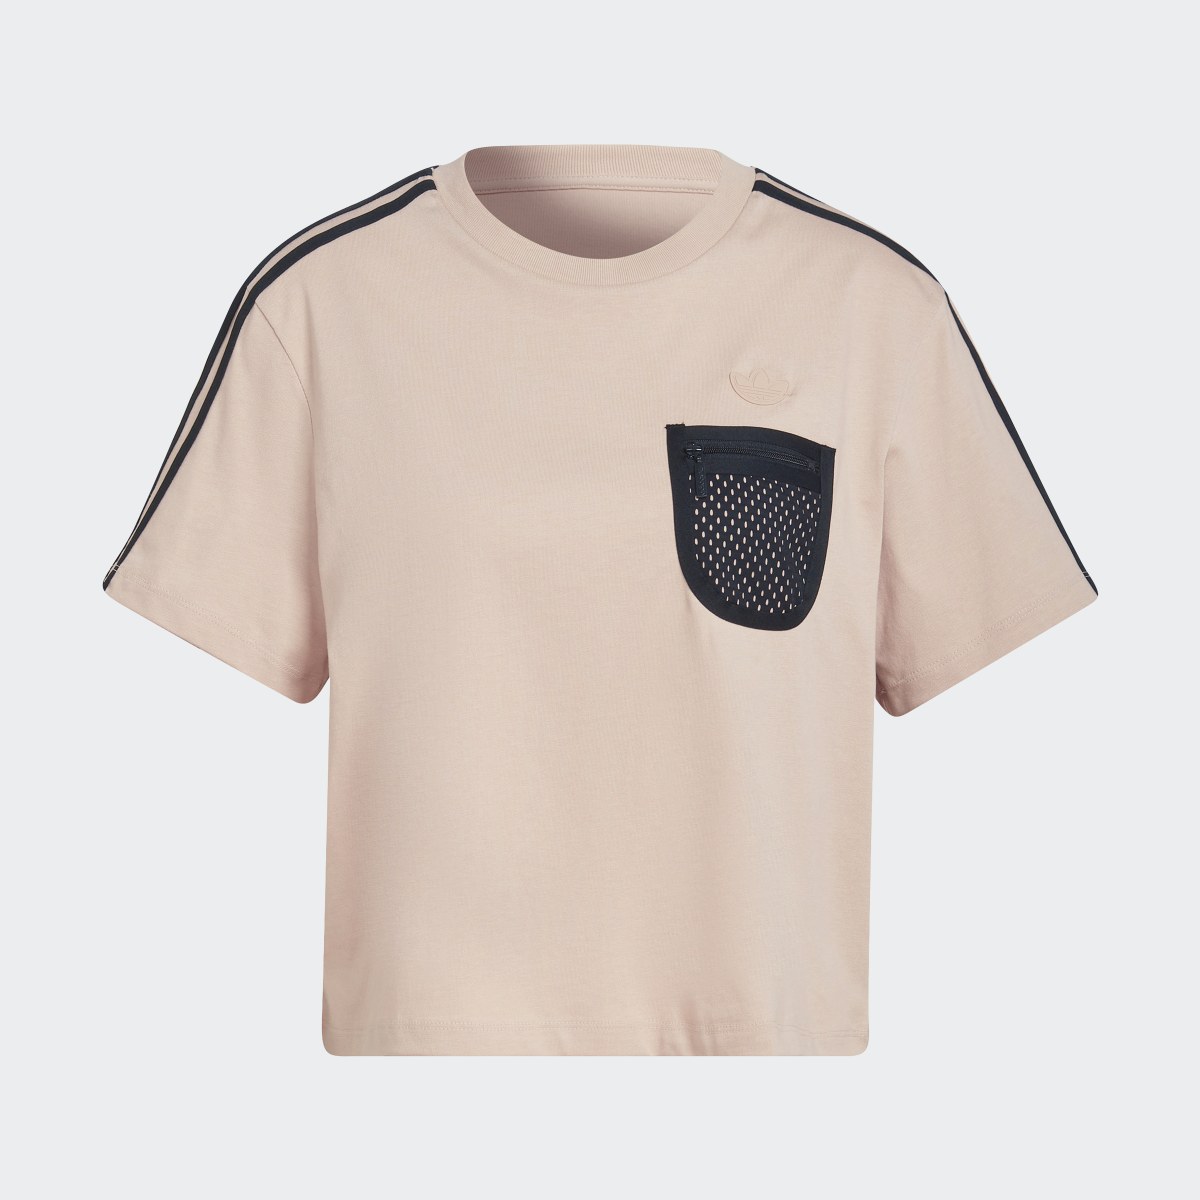 Adidas T-shirt Curta. 11